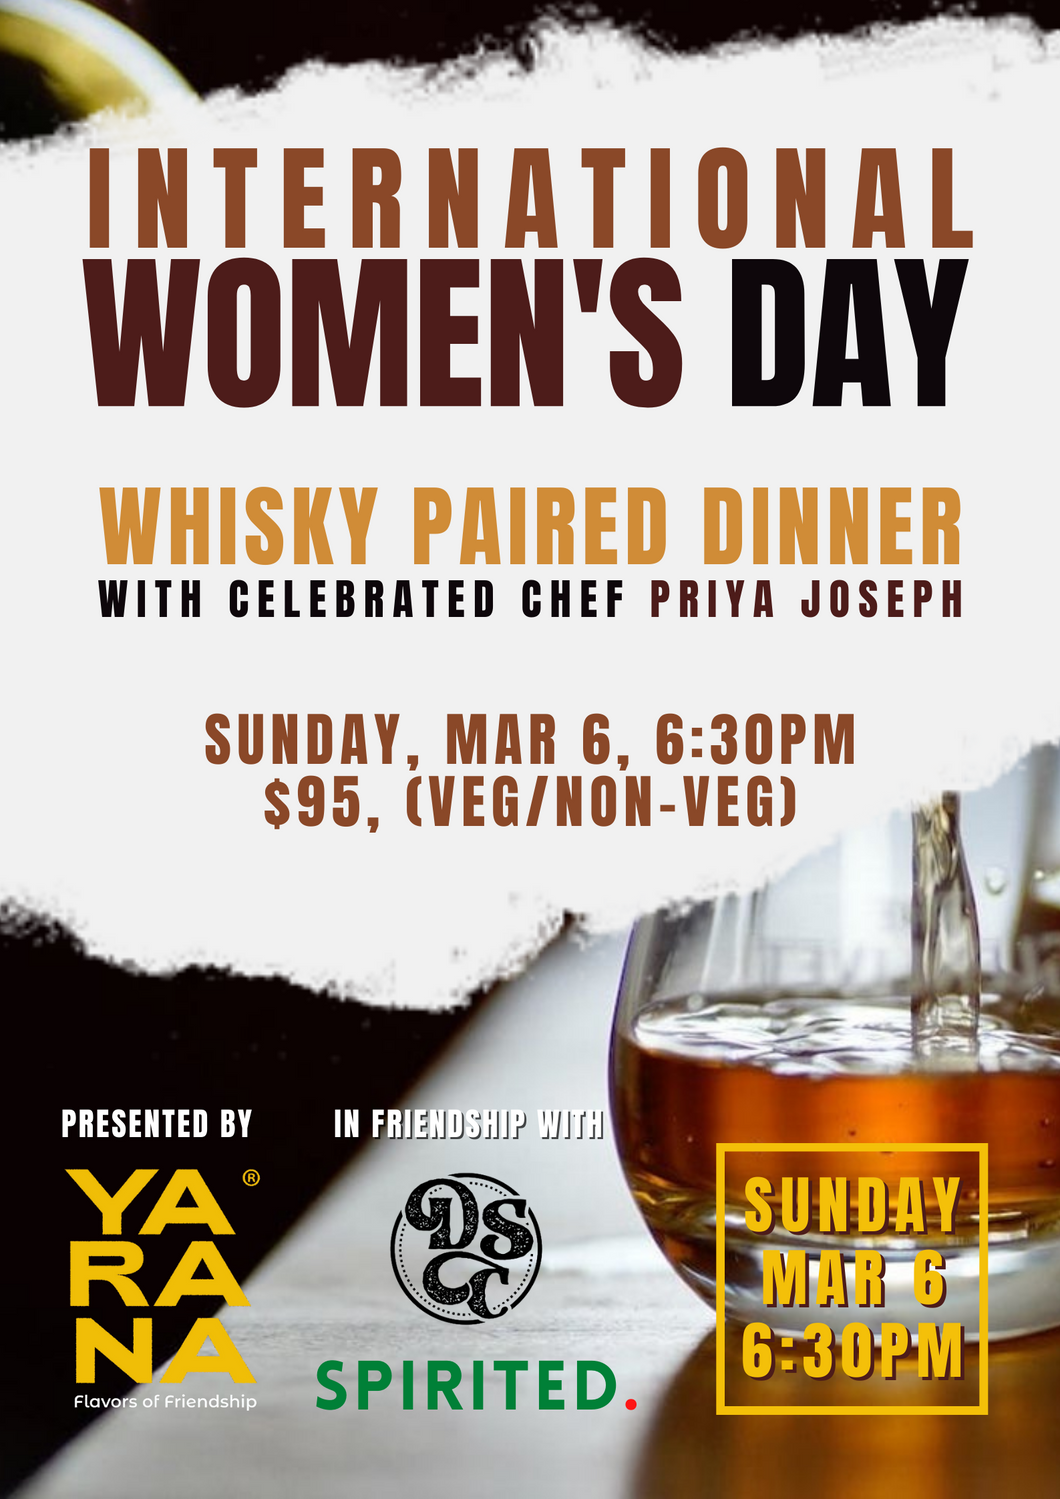 International Women's Day - Whisky Paired Dinner @YARANA